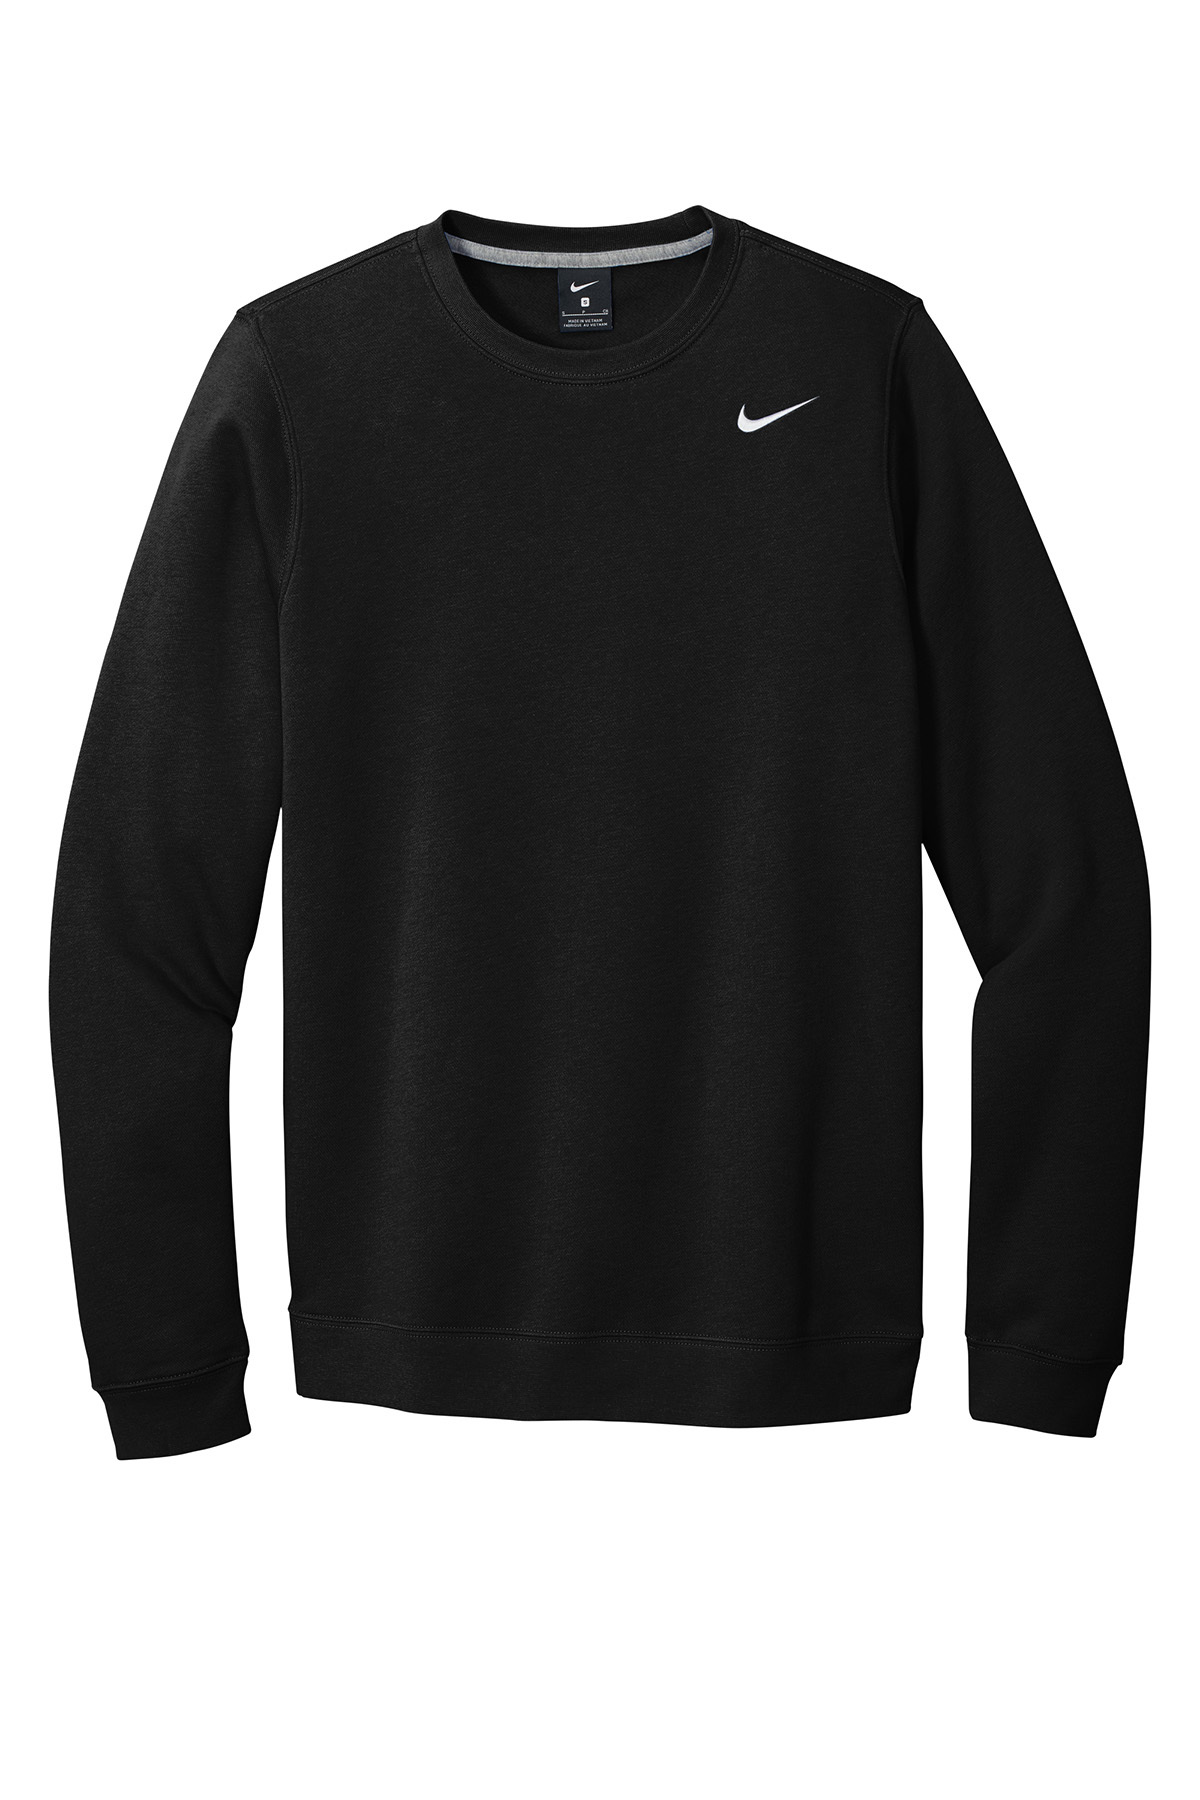 Nike Club Fleece Crew | Product | SanMar